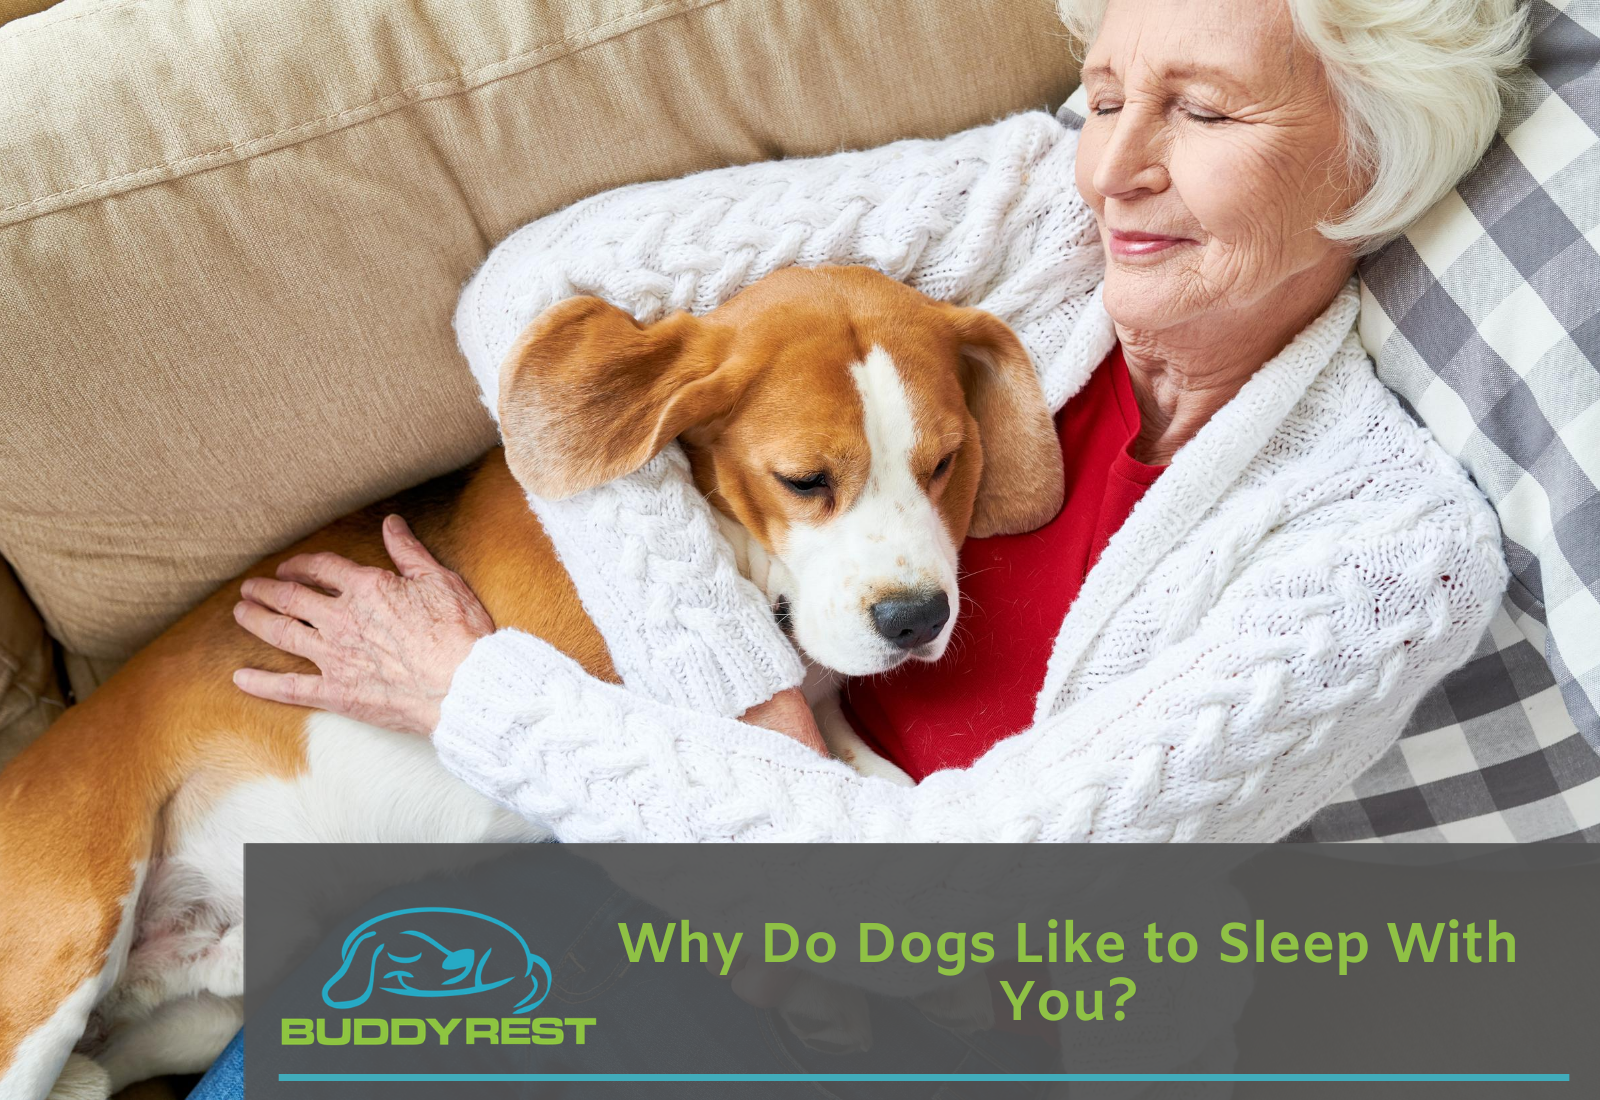 Why Do Dogs Like to Sleep With You?